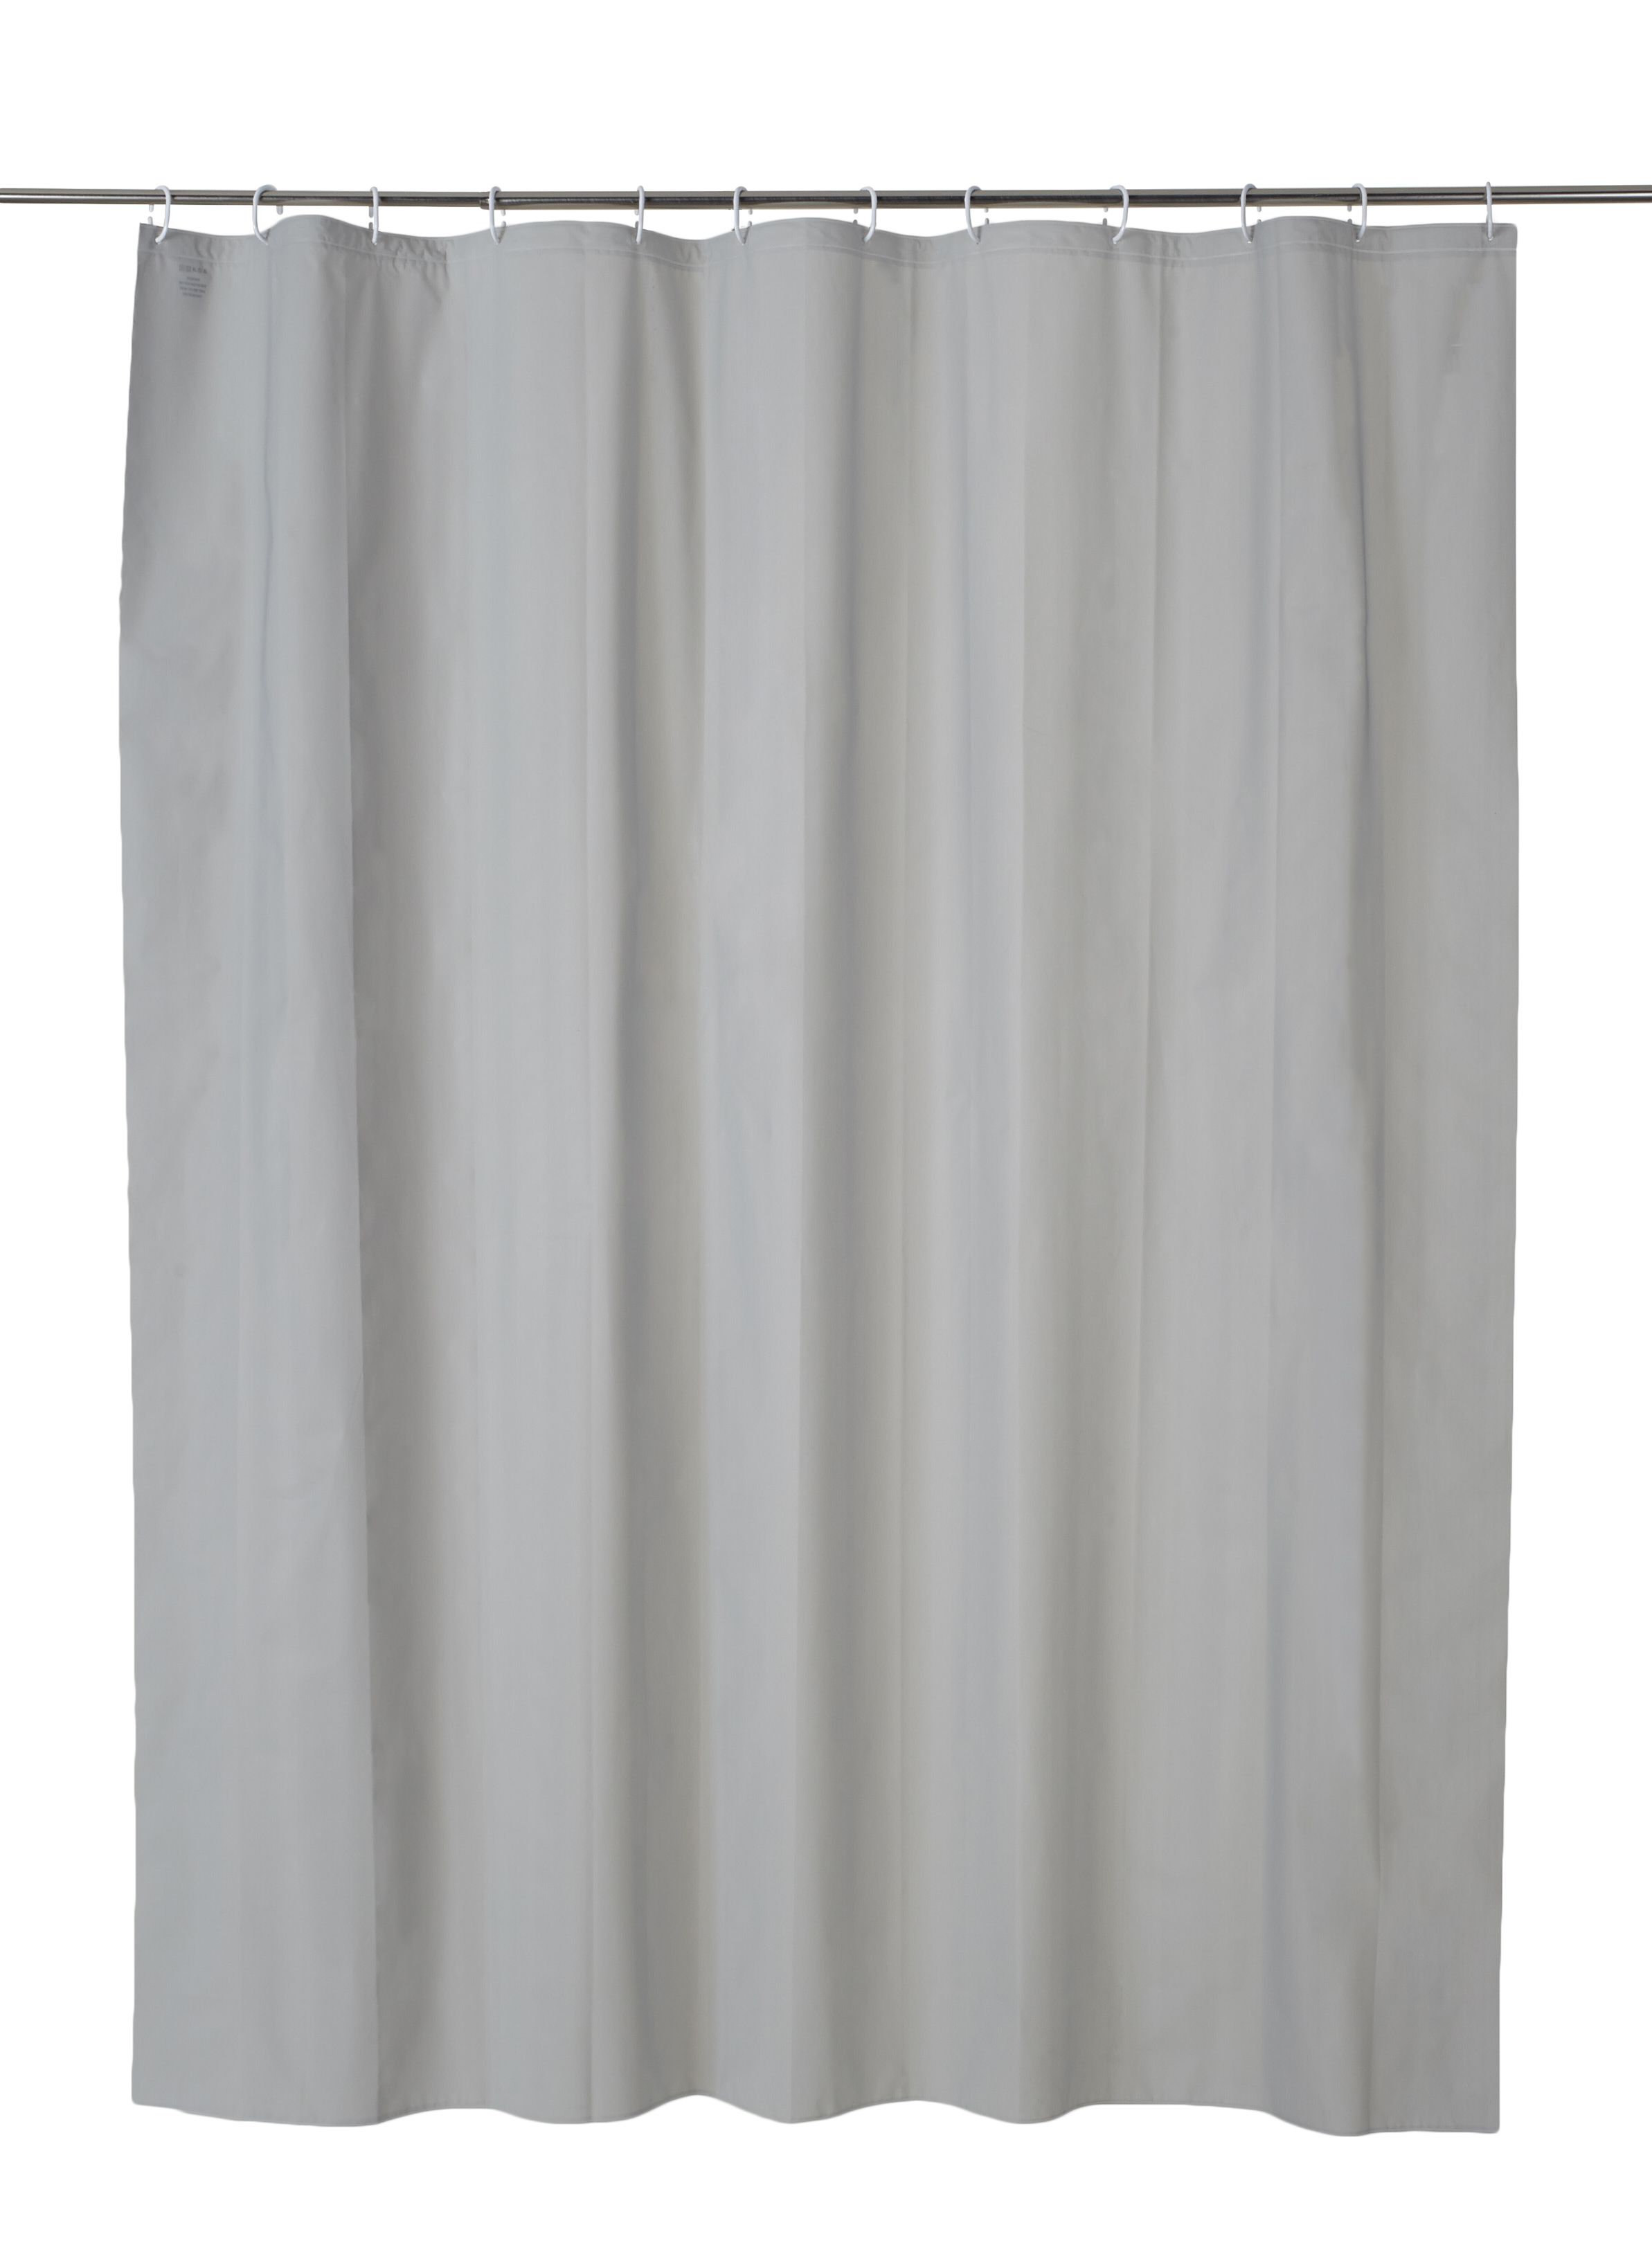 GoodHome Drina Anthracite Plain Shower curtain (H)200cm (W)180cm